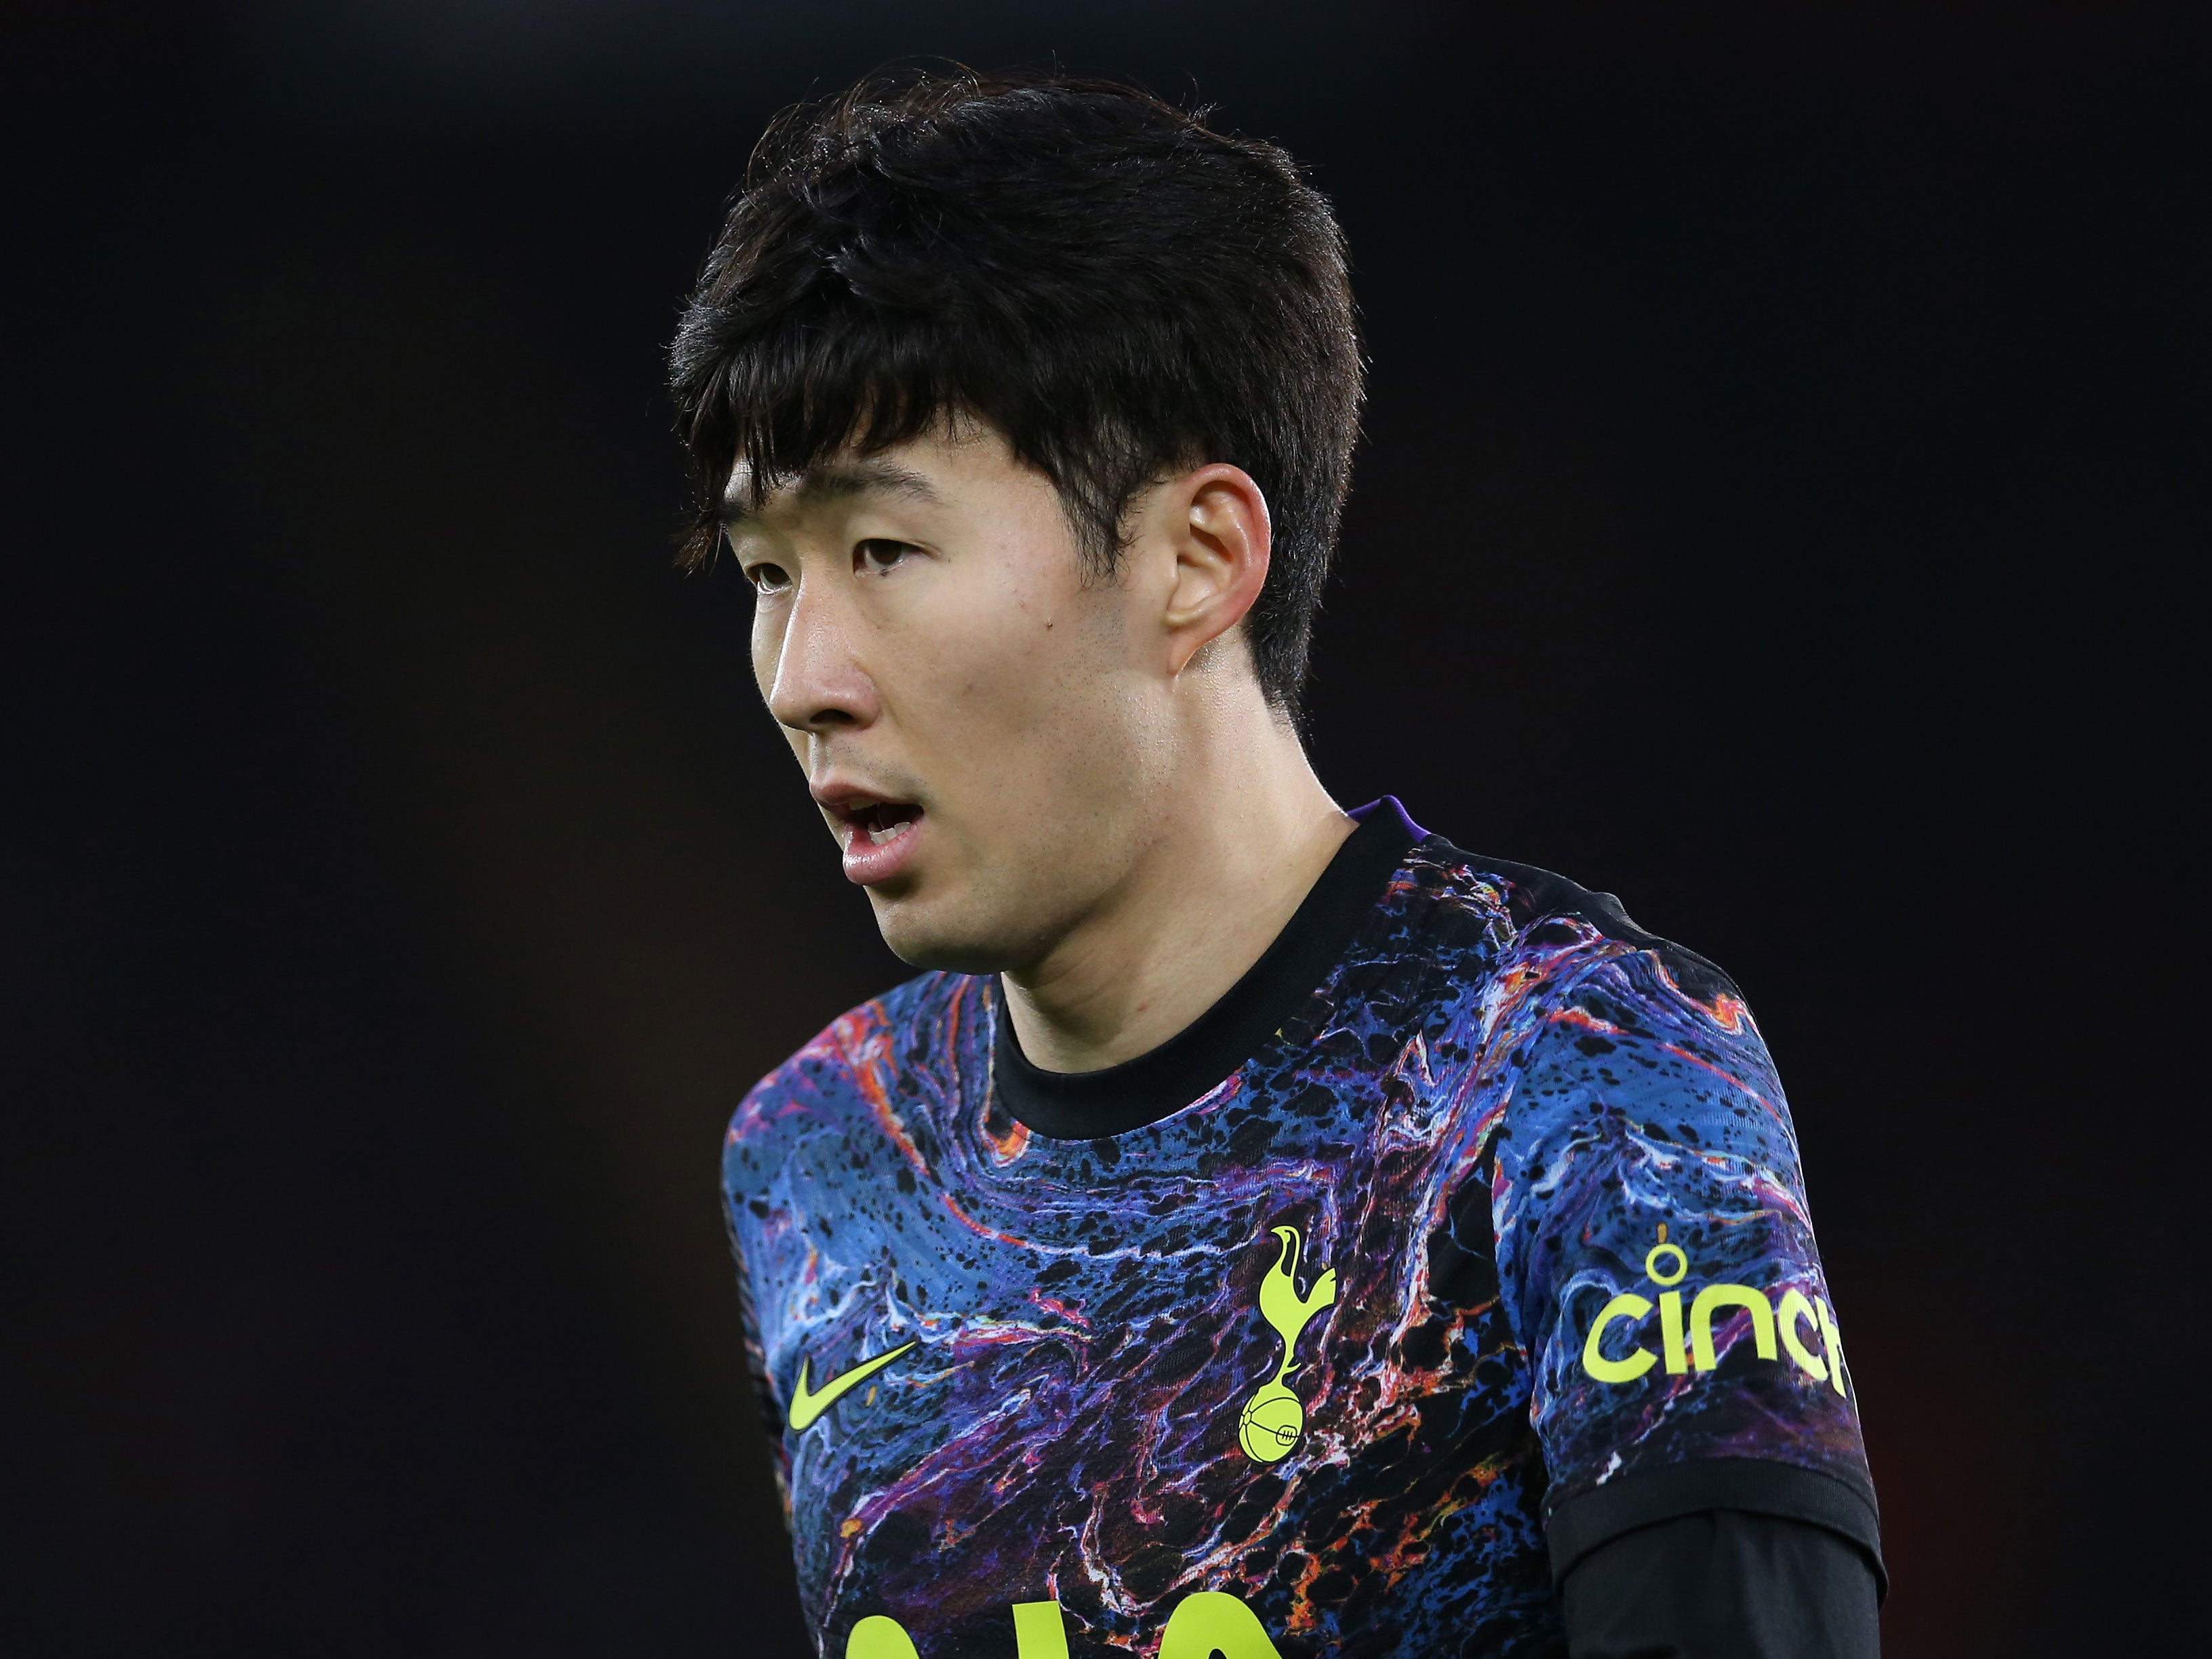 Tottenham forward Son Heung-min